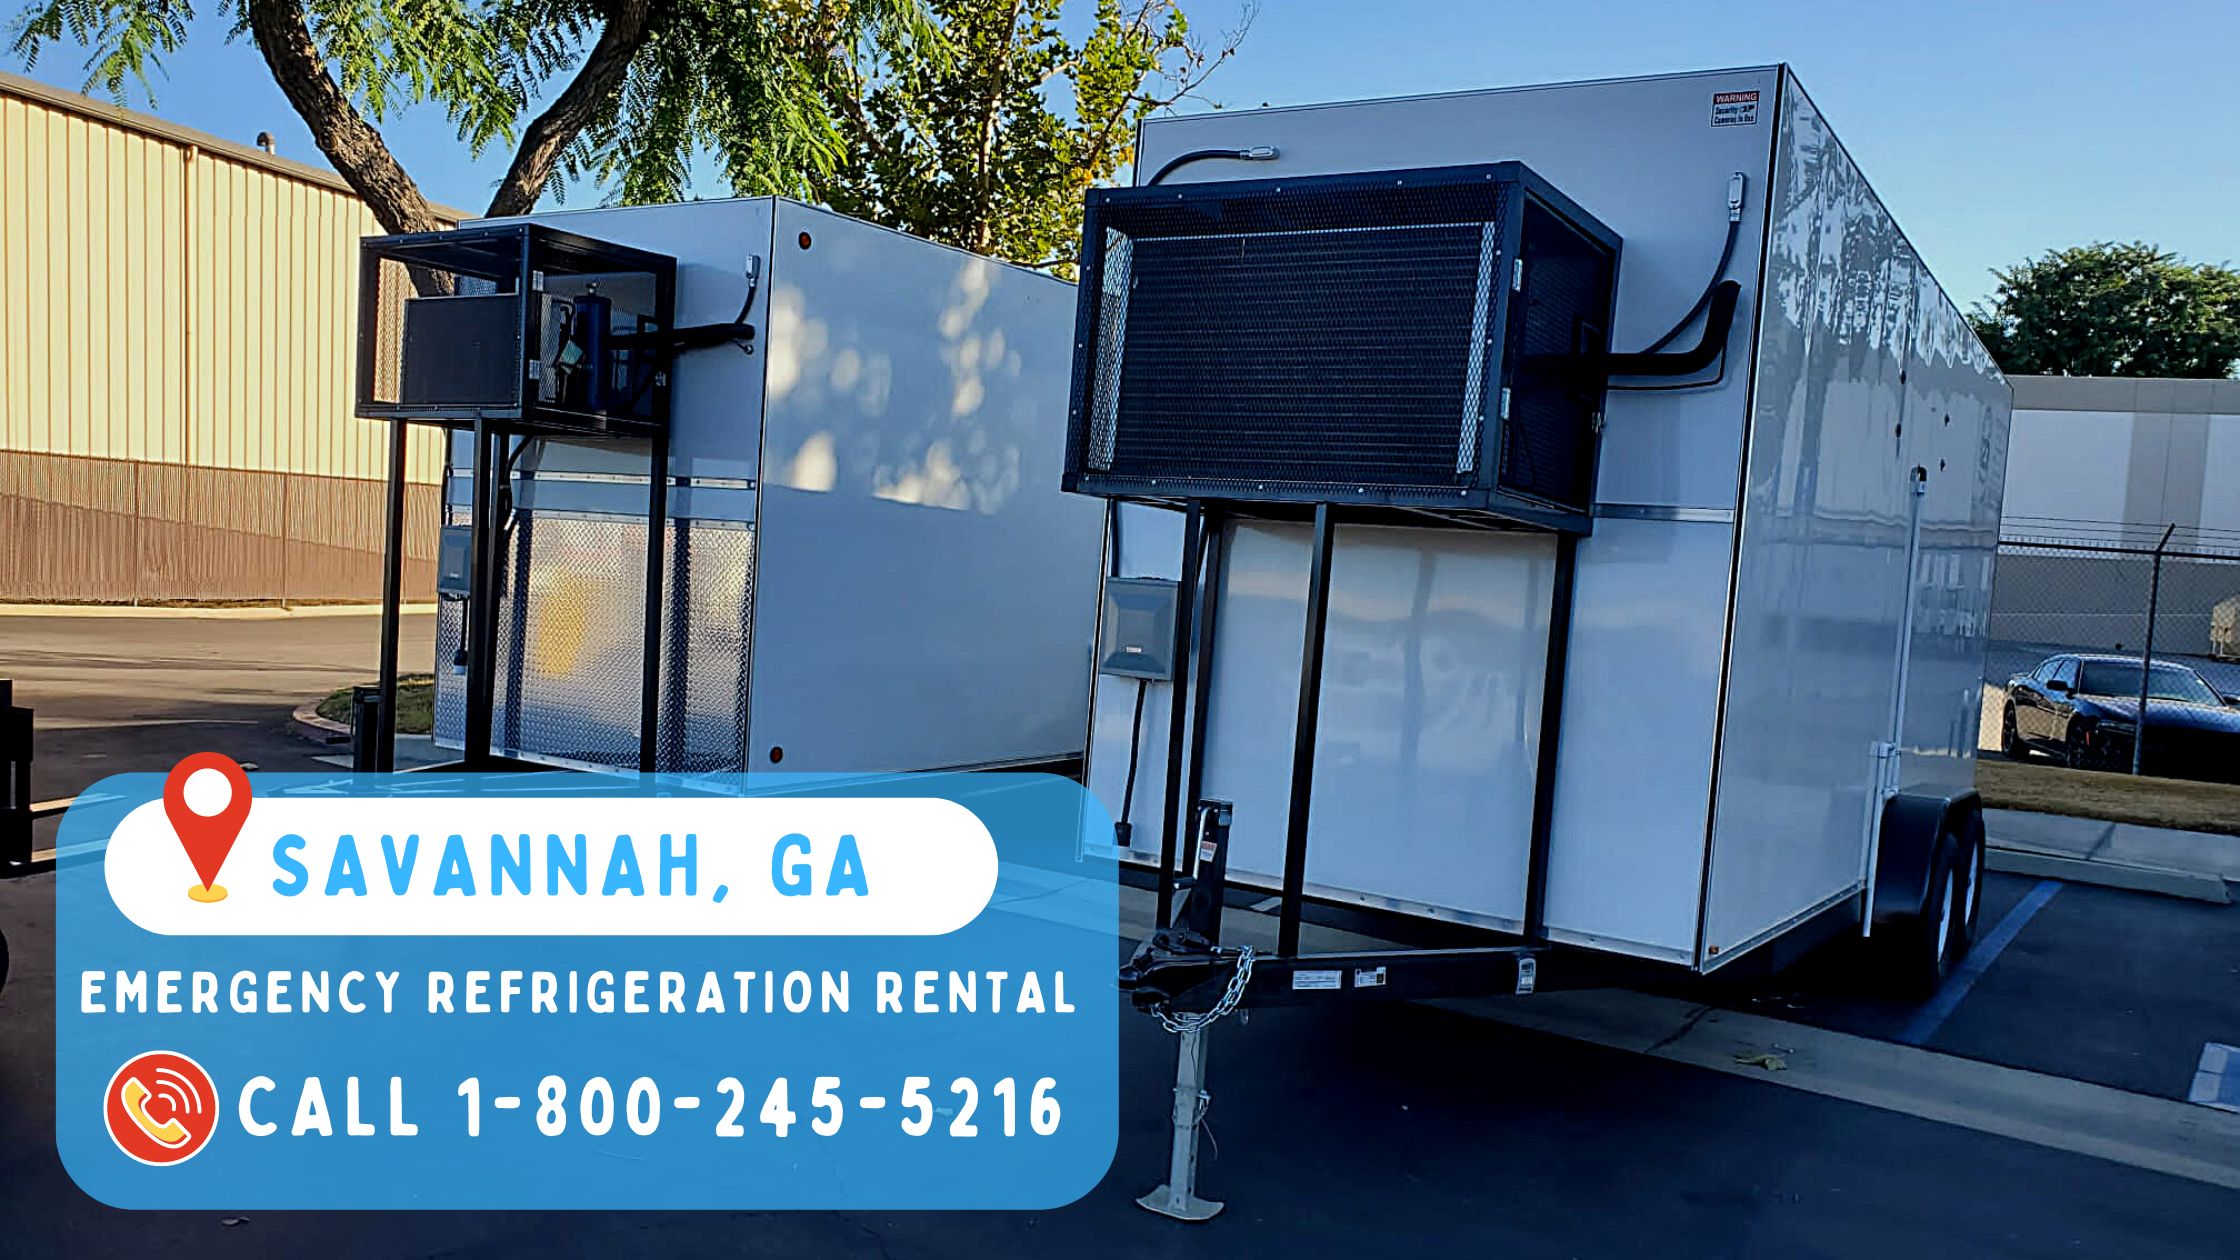 Emergency refrigeration rental in Savannah